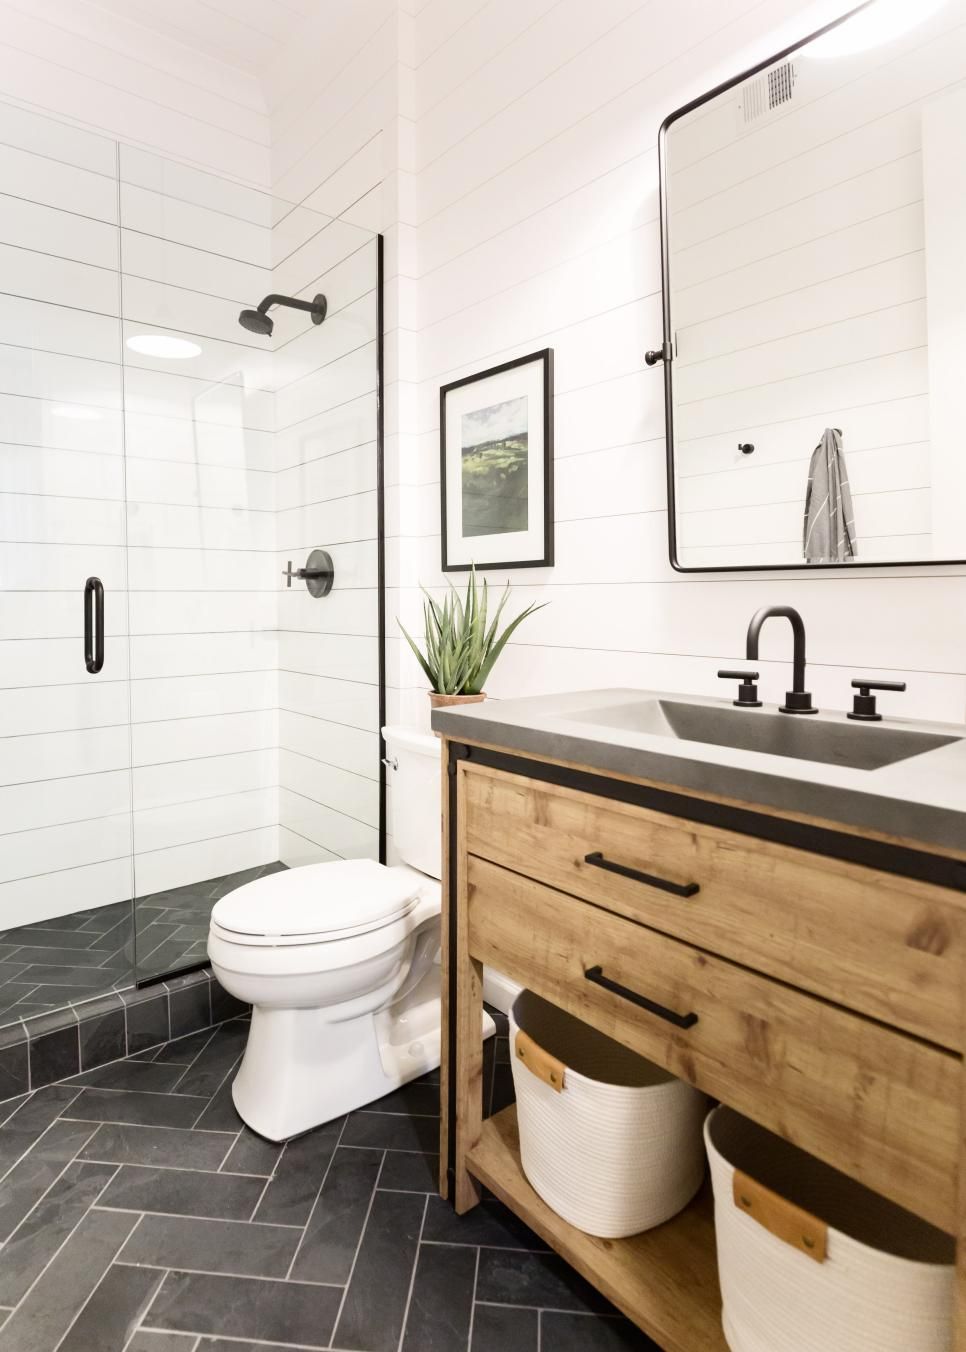 Transforming Your Basement into a Stylish
Bathroom